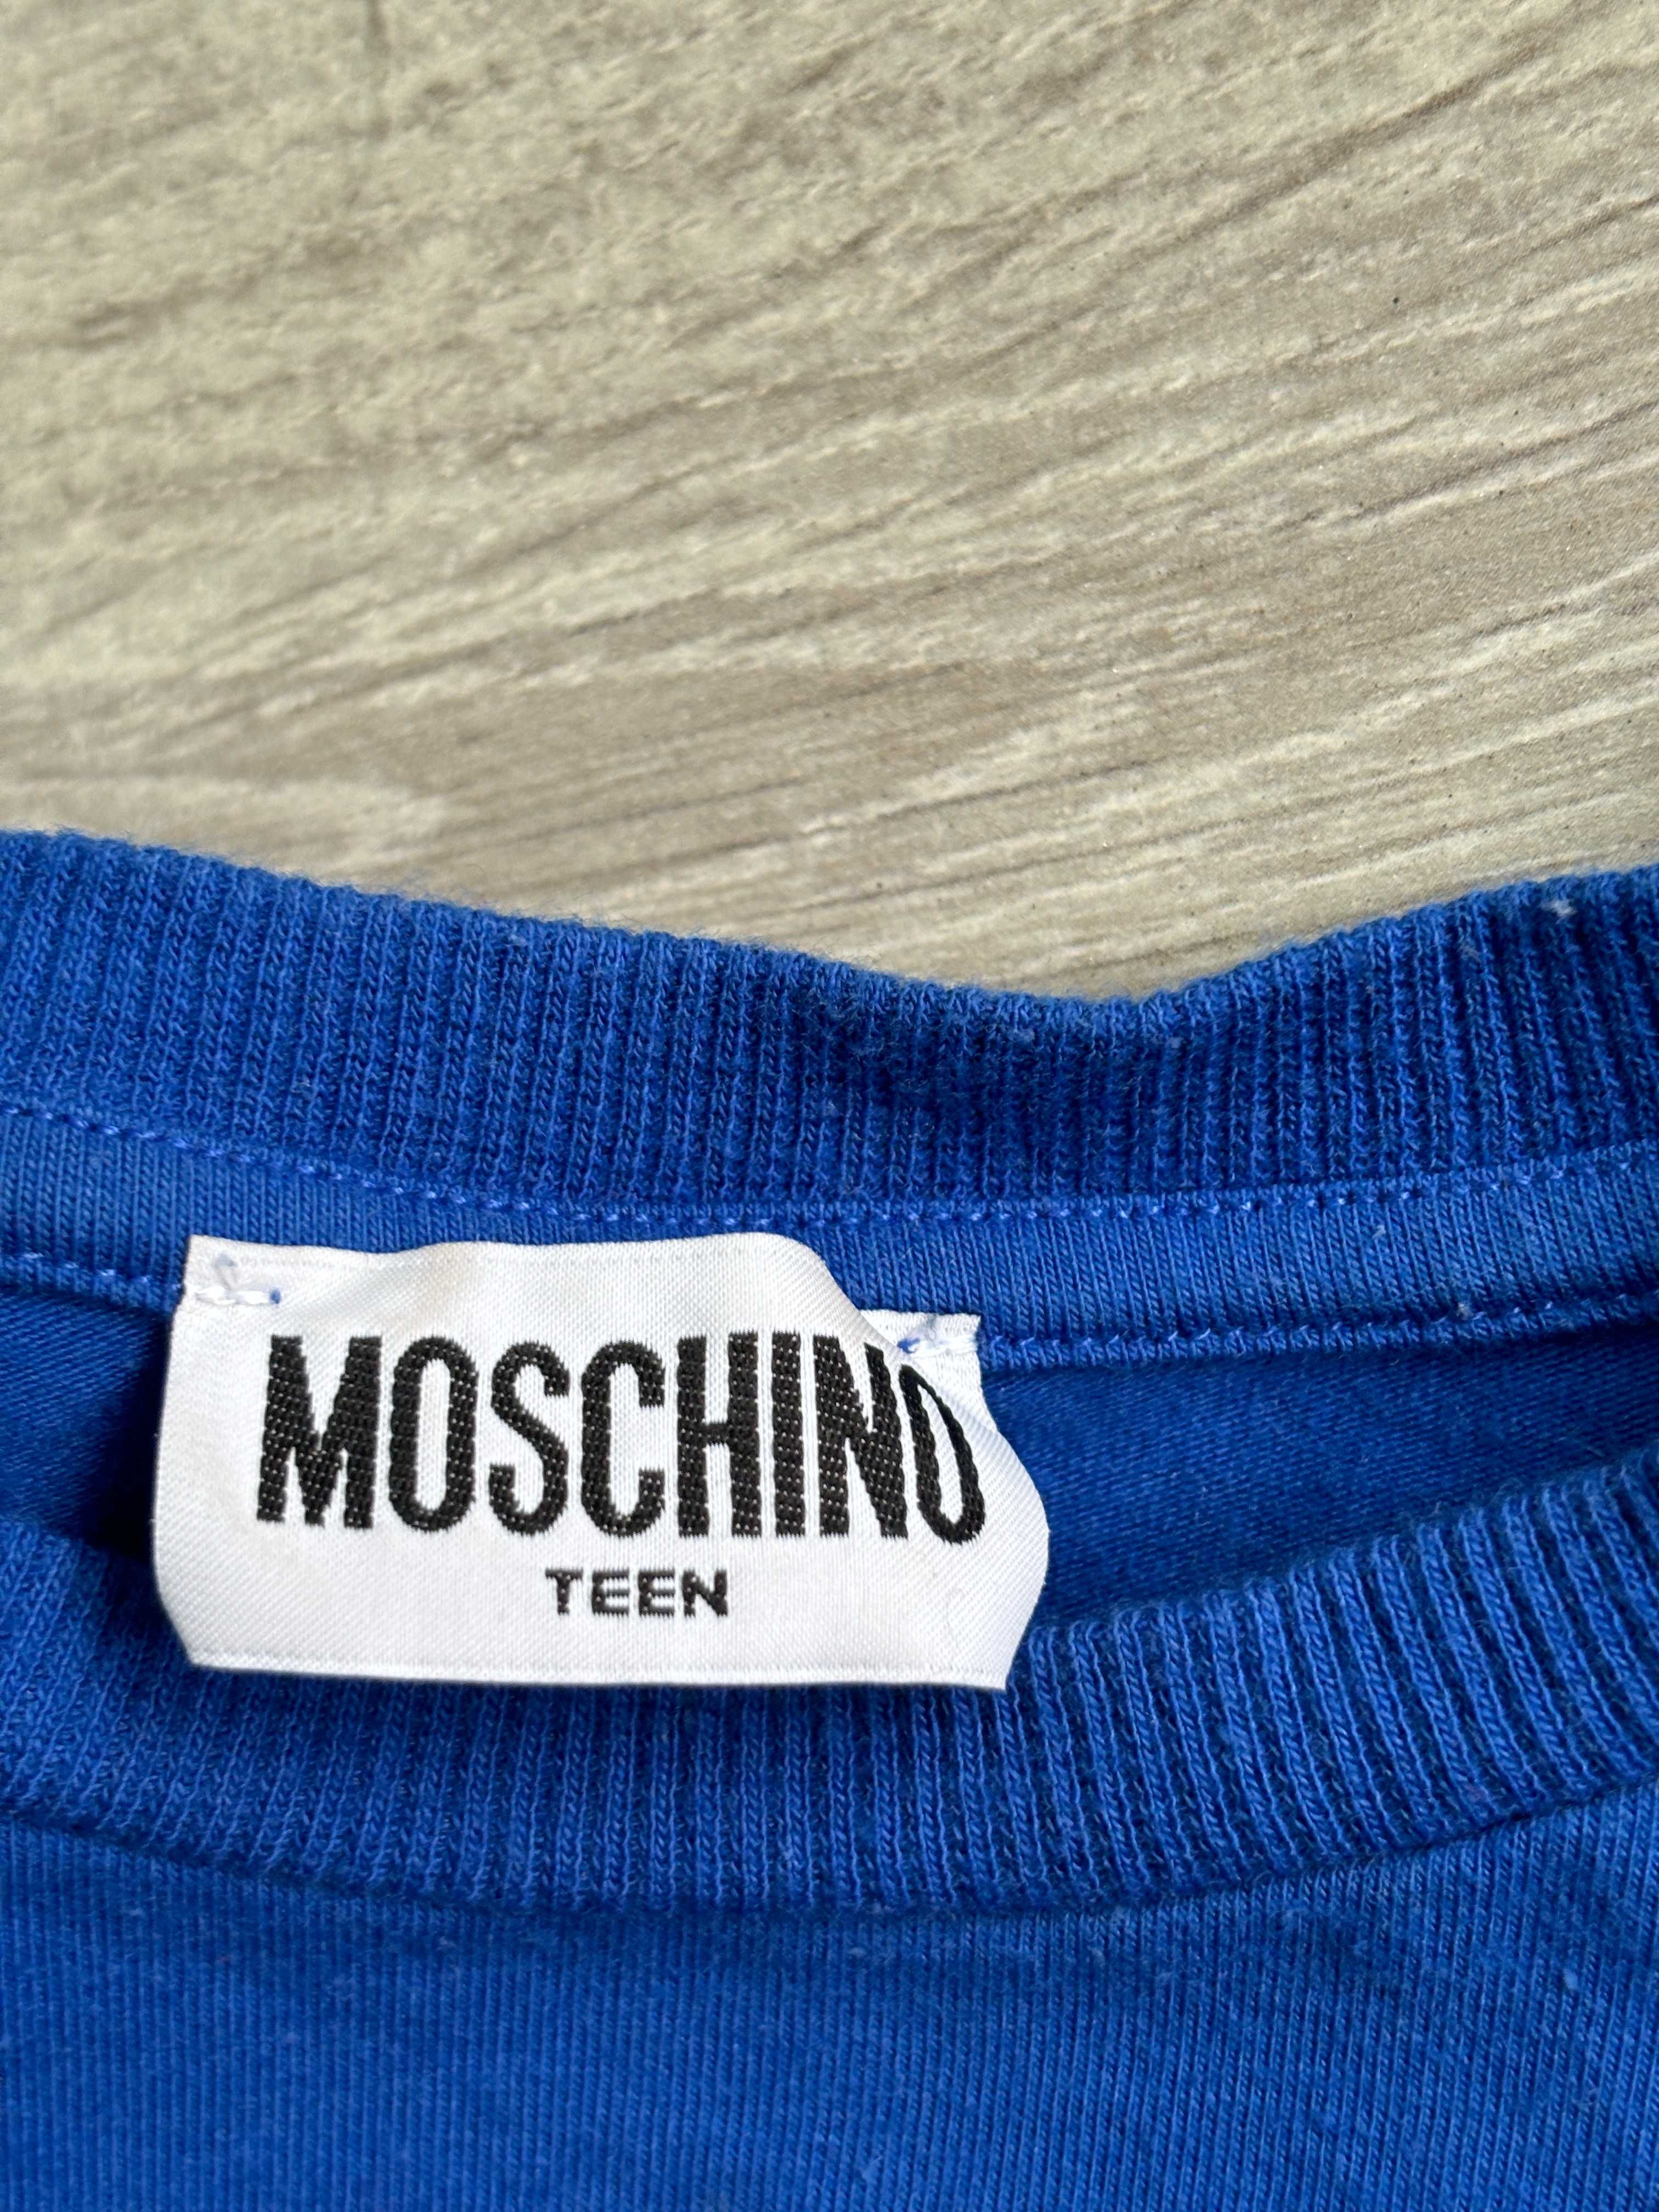 Брендова футболка Moschino Москино XXS размер майка оригинал